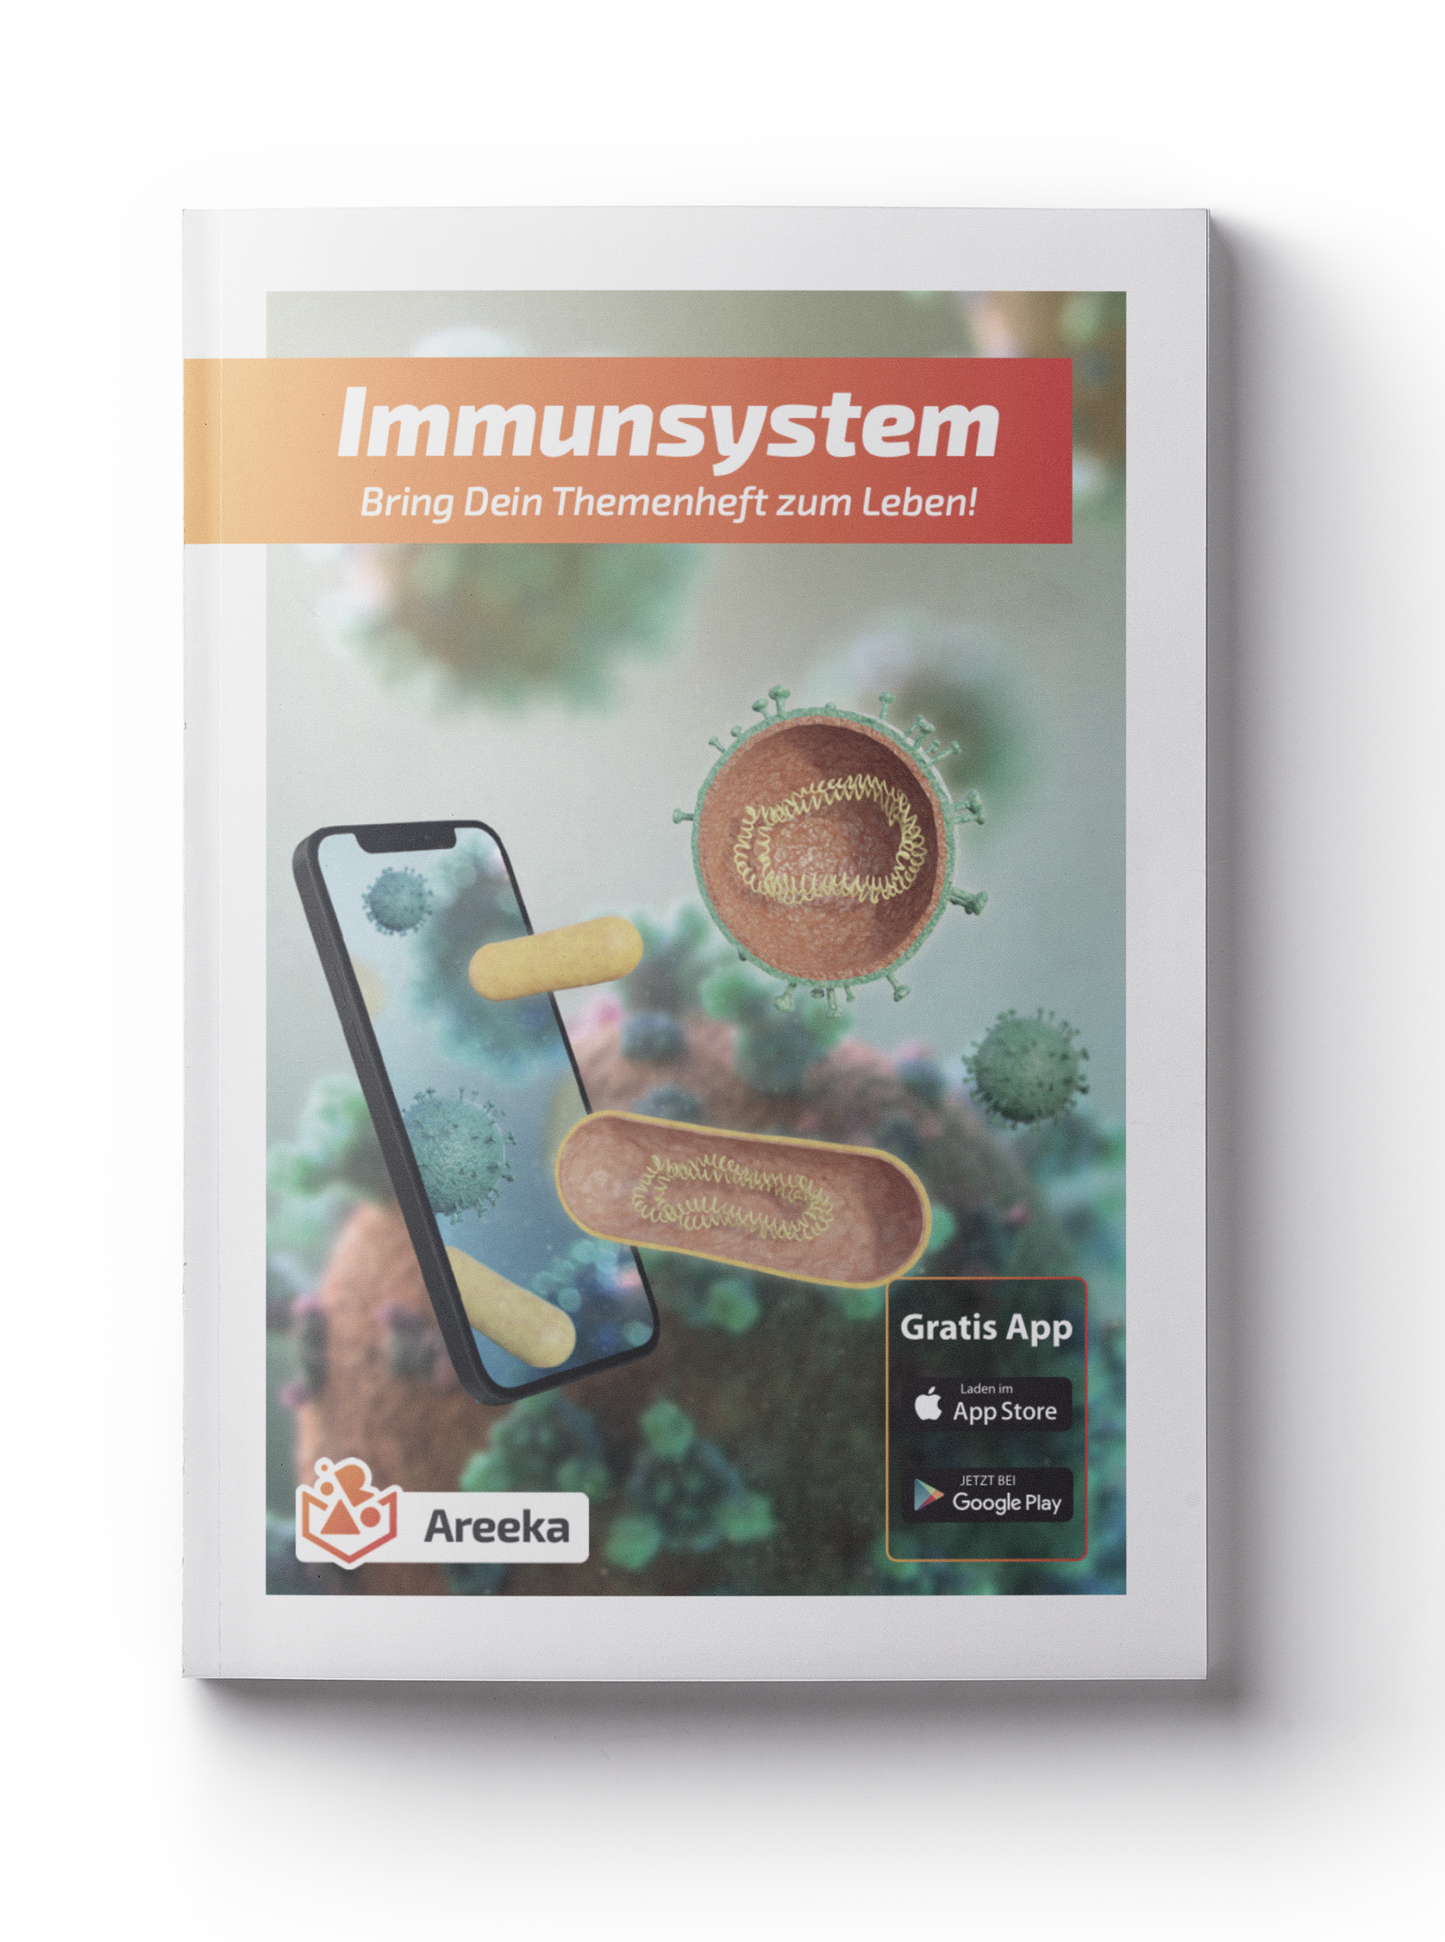 Areeka Themenheft Cover - Immunsystem